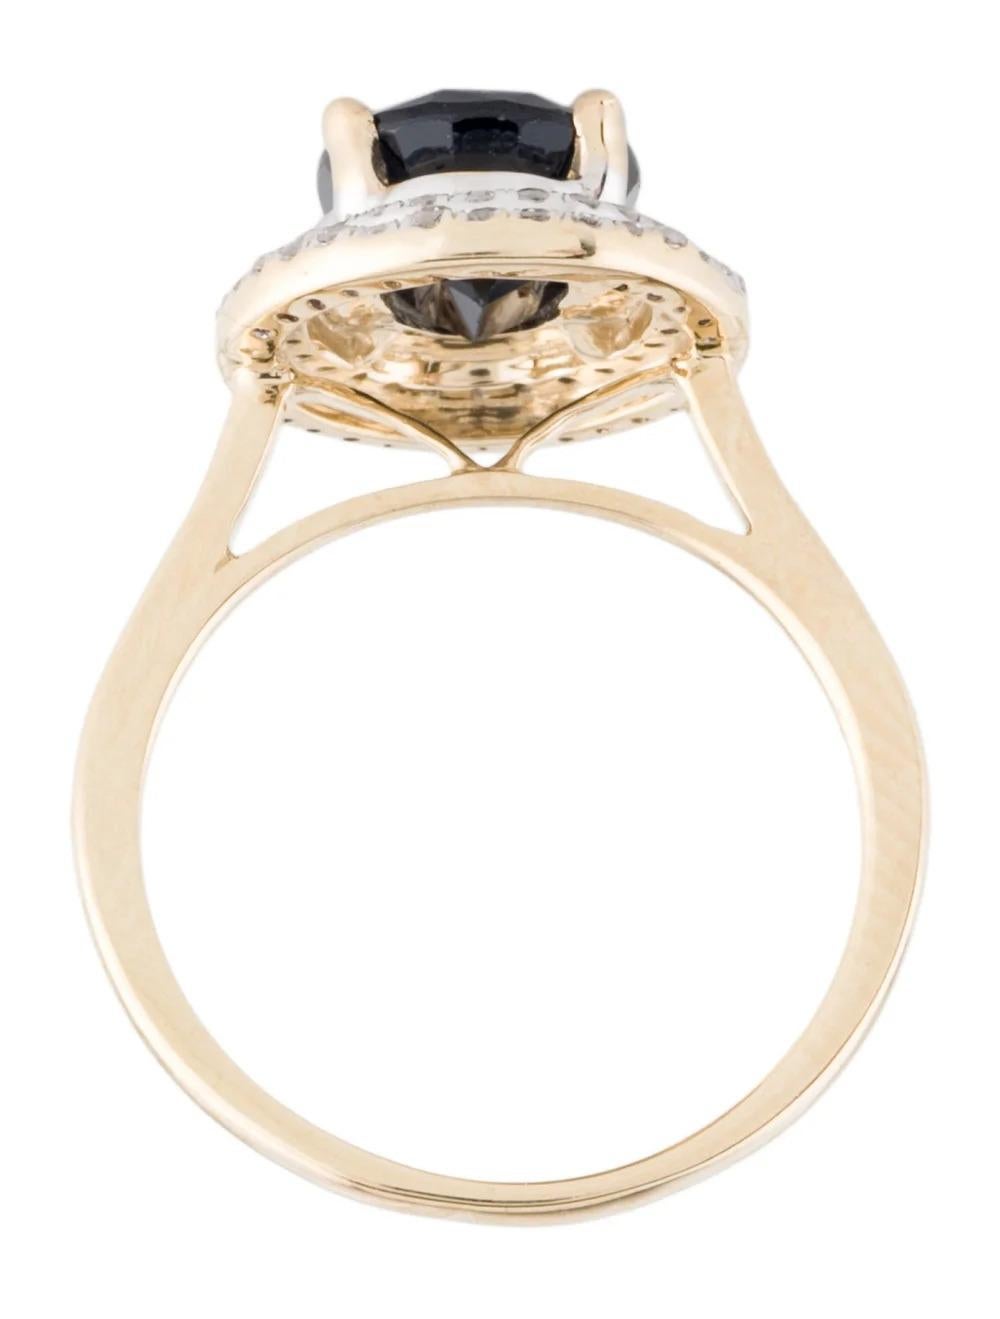 Women's Vintage 14K 3.40ct Sapphire Diamond Halo Cocktail Ring Size 6.25 - Luxury Piece For Sale